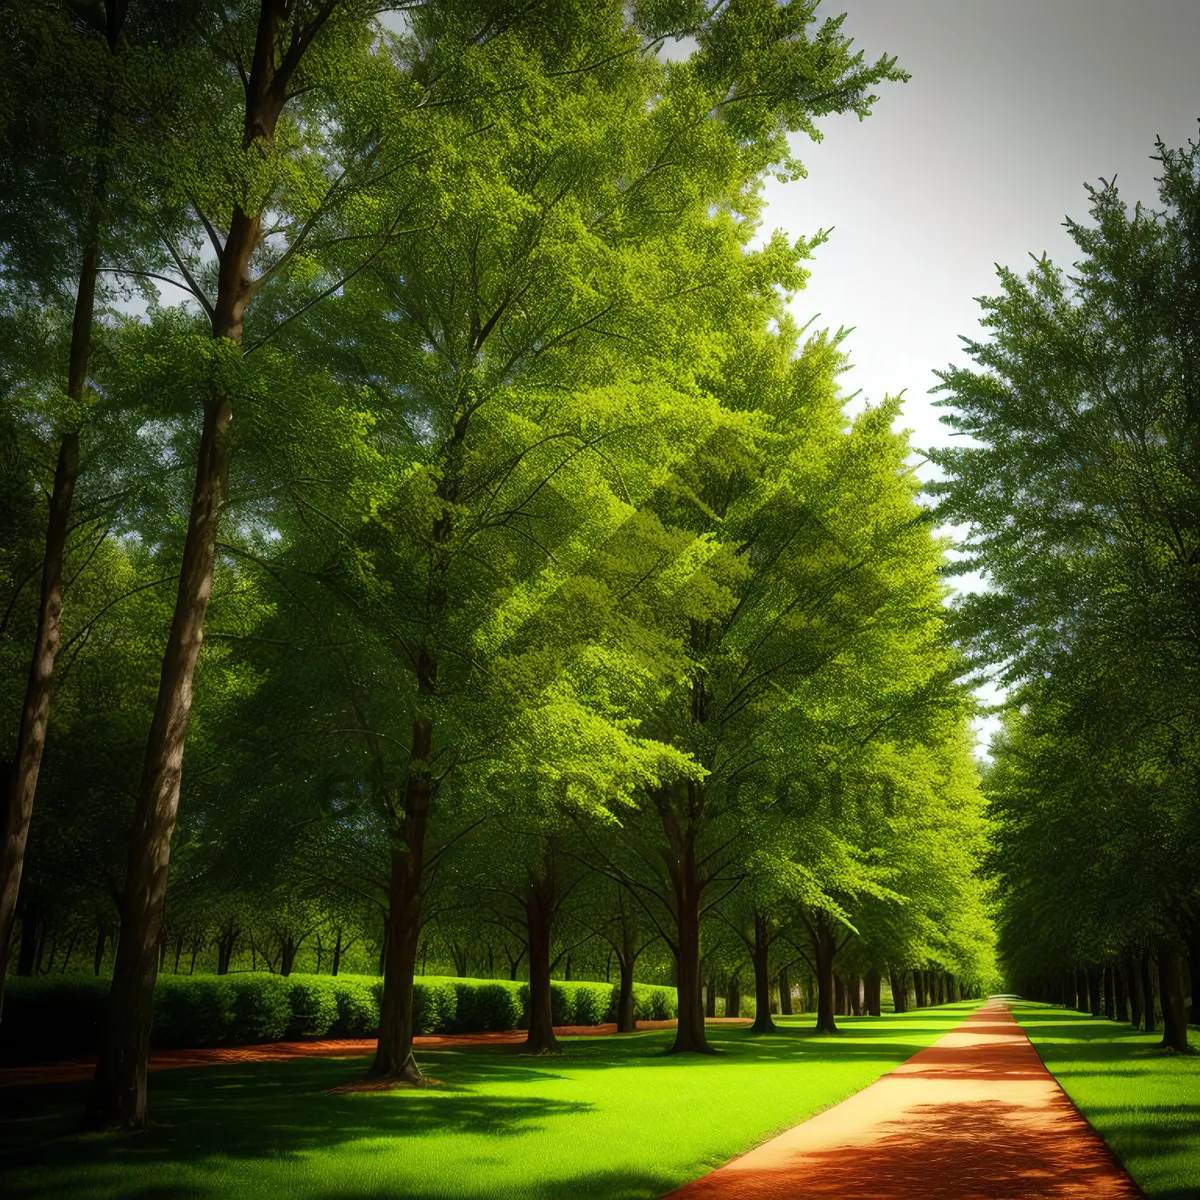 Picture of Serene Forest Pathway Under Summer Sunlight